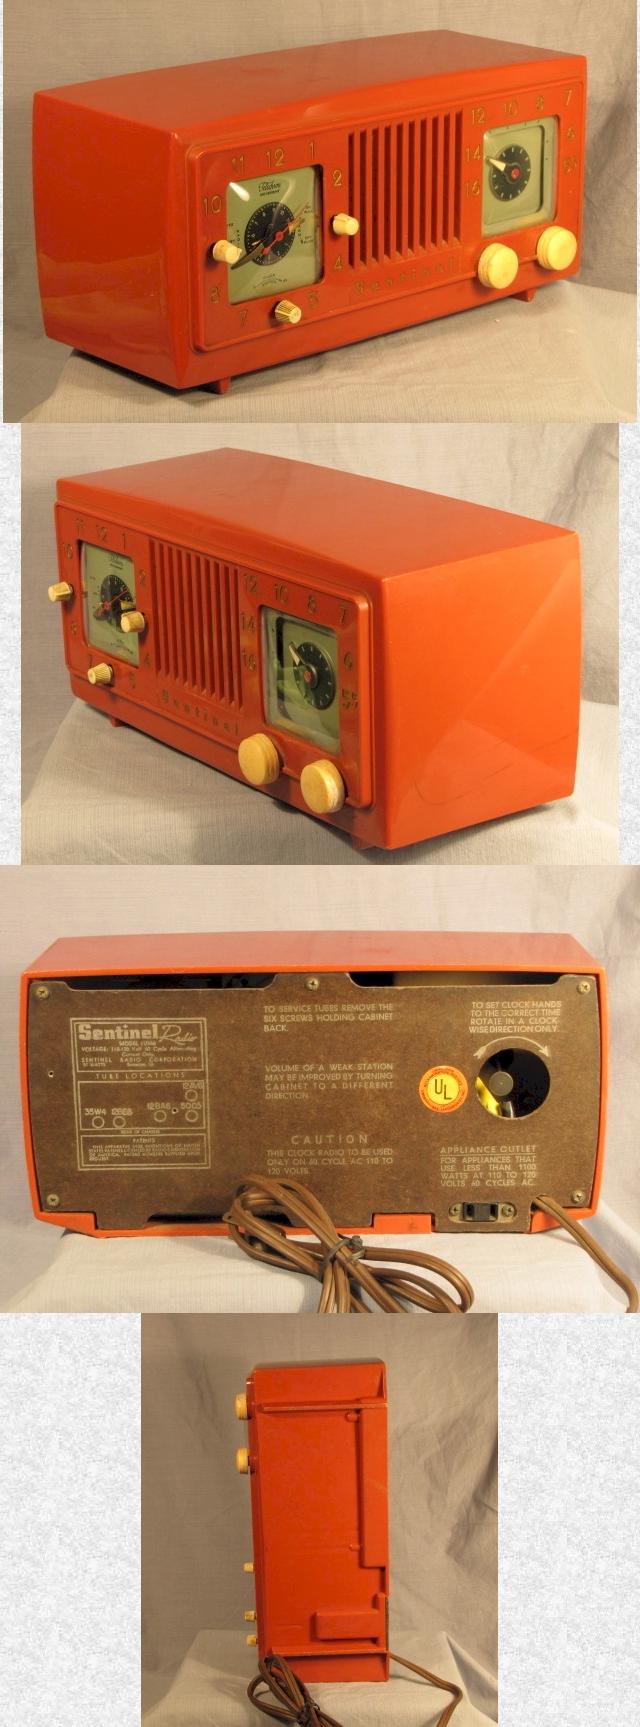 Sentinel 1U346 Clock Radio (1950s?)